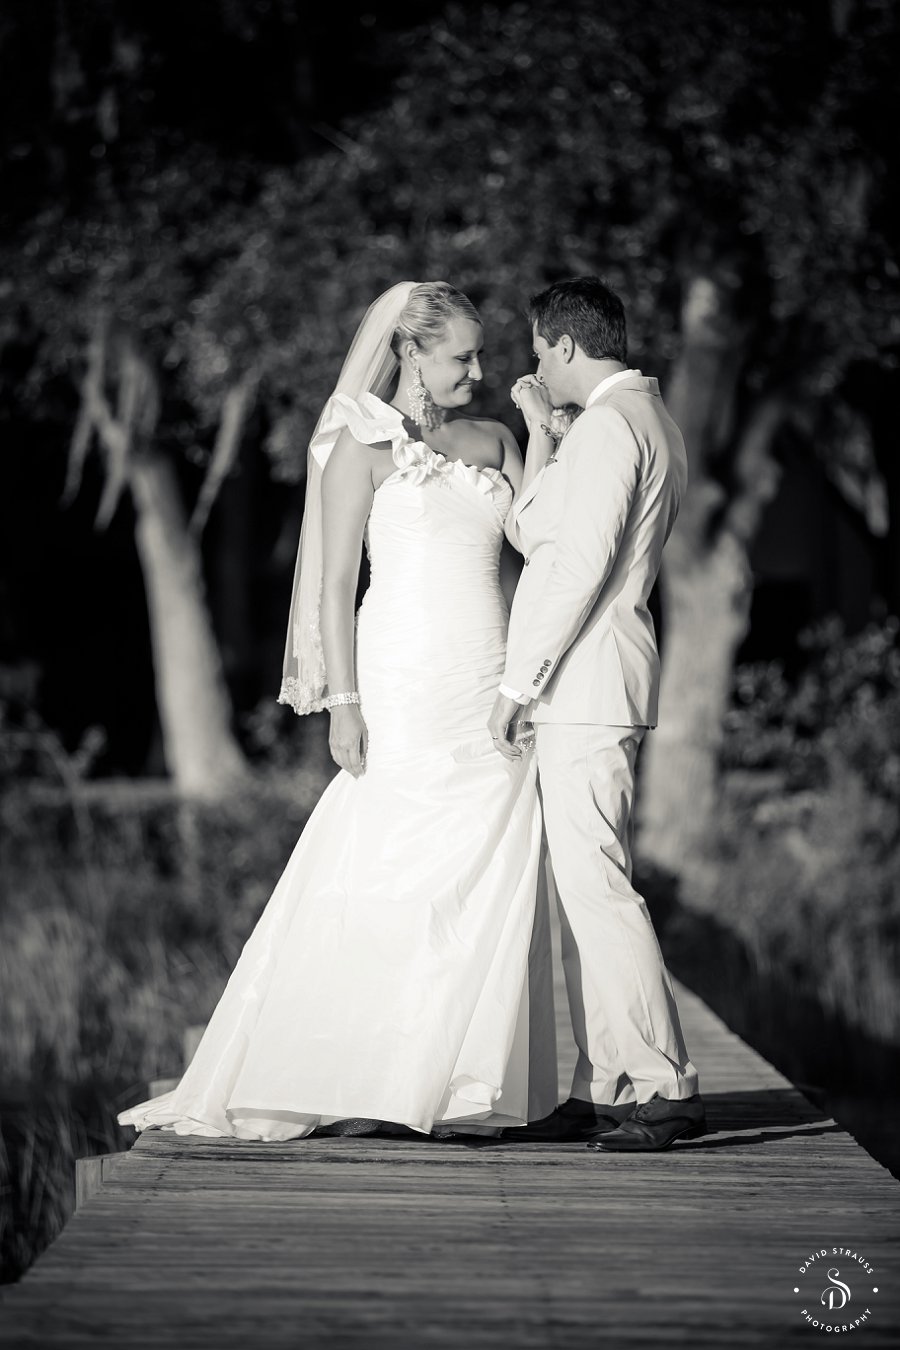 Charleston Wedding Photography - River Oaks Venue - Photographer David Strauss - 29